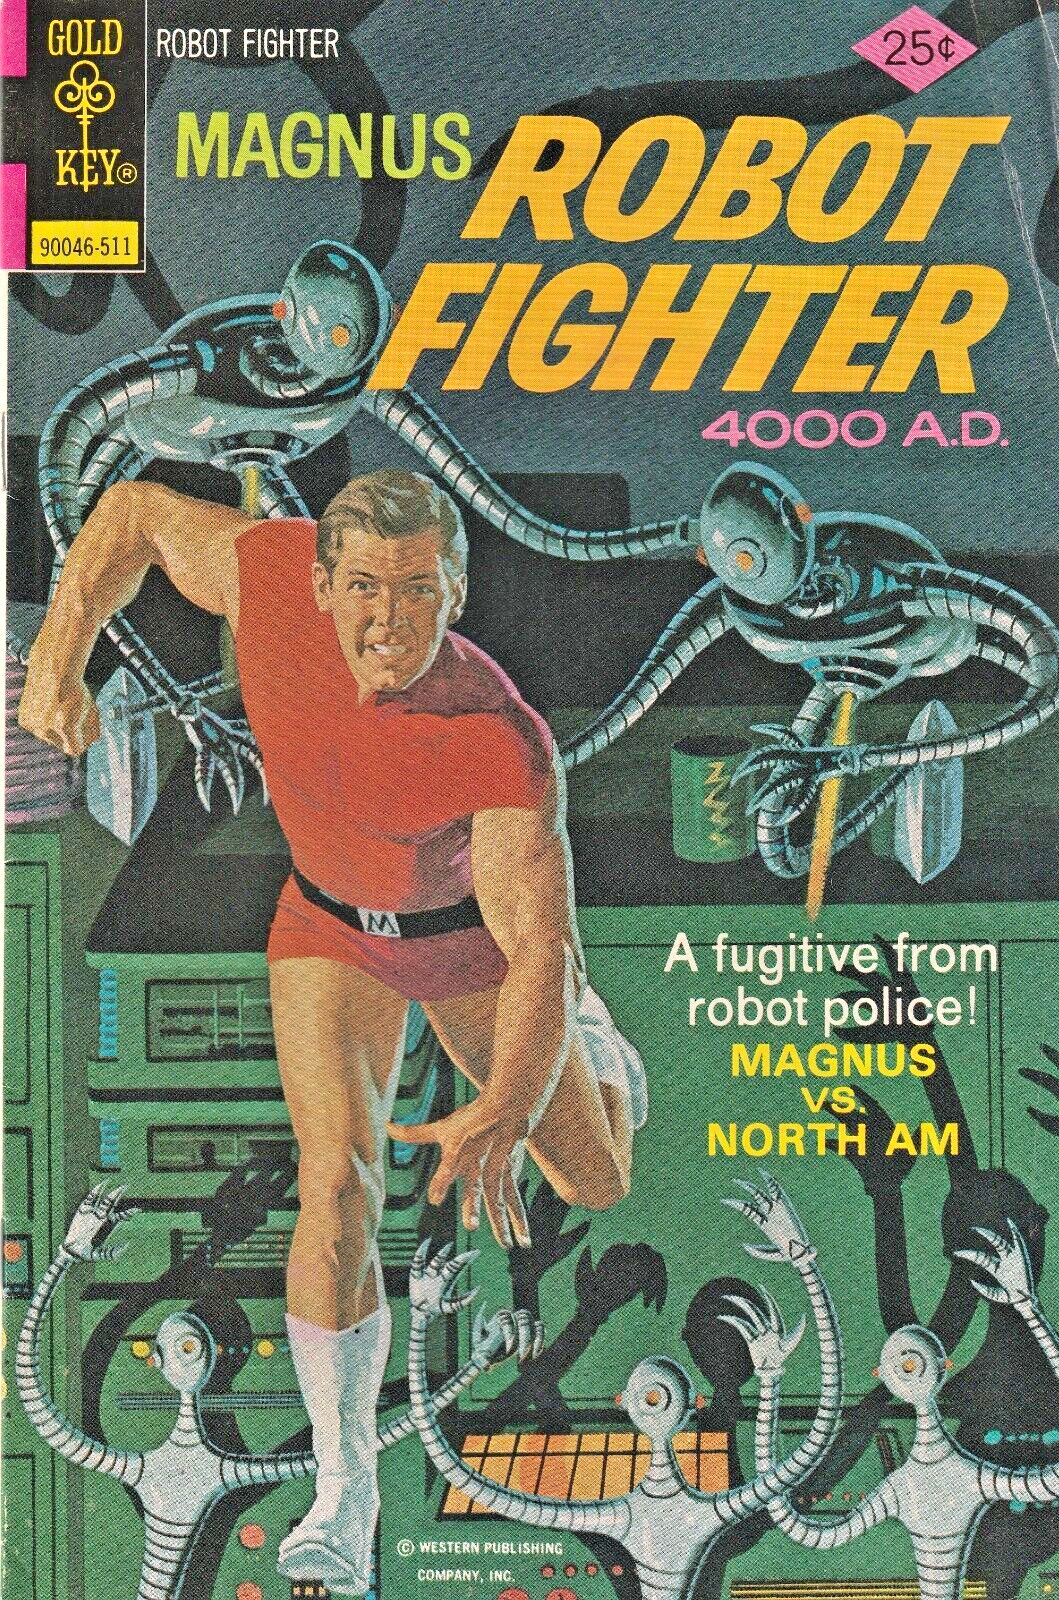 MAGNUS ROBOT FIGHTER #41   PROFESSOR HARBINGER  GOLD KEY  1975  NICE